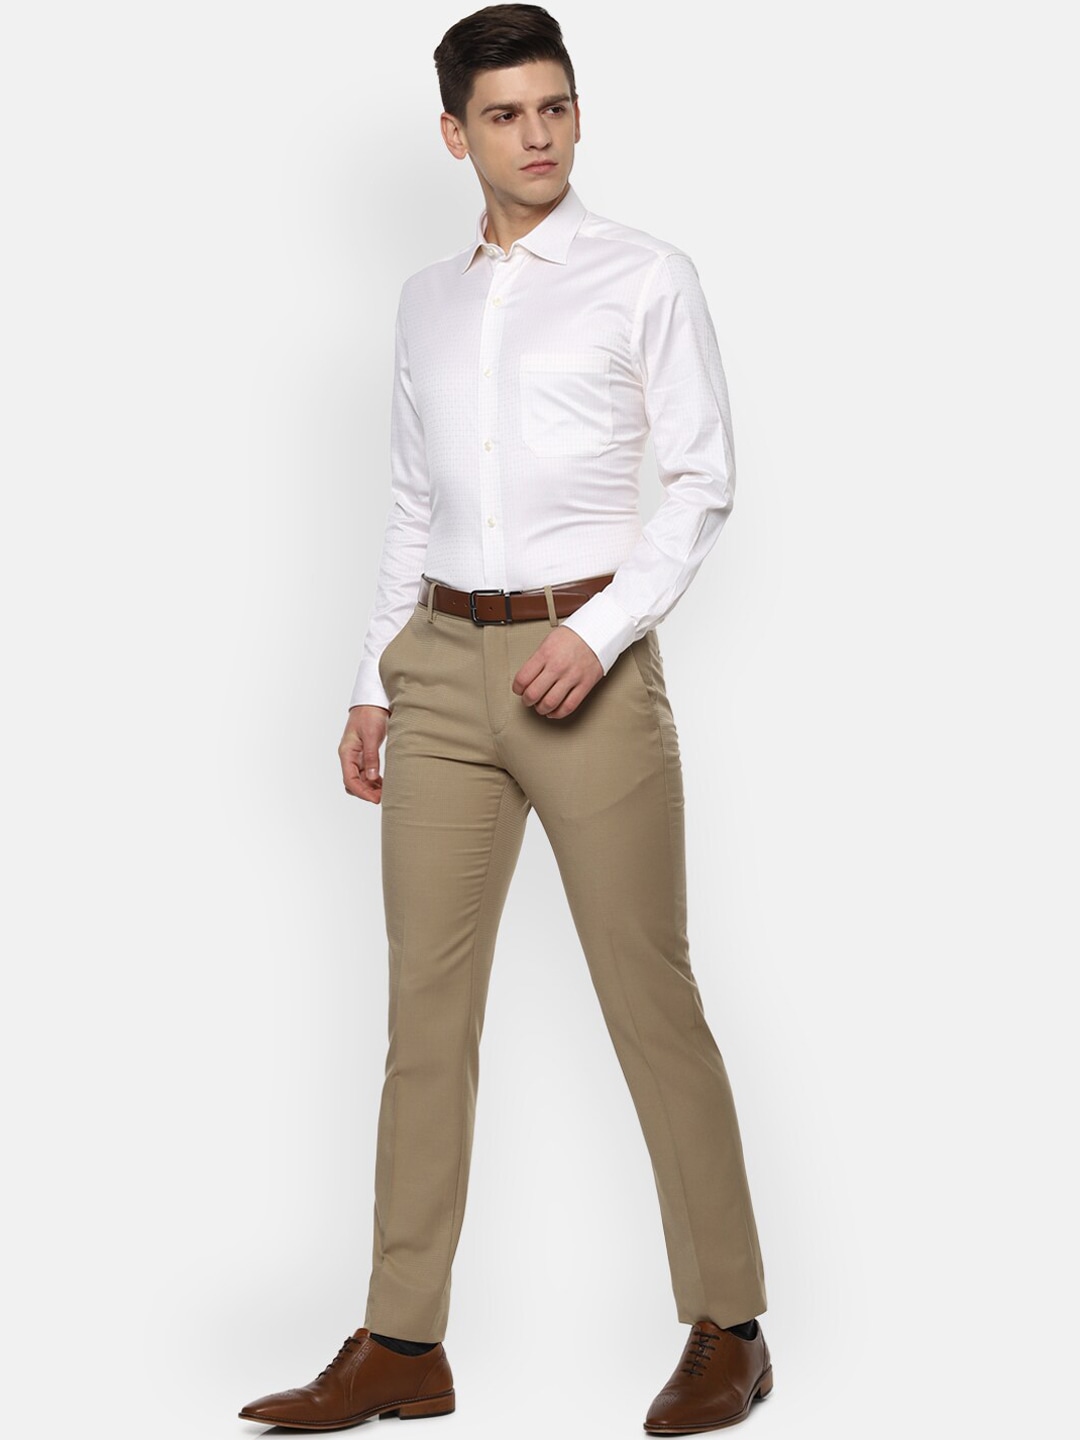 Khaki Trouser White Shirt Combination